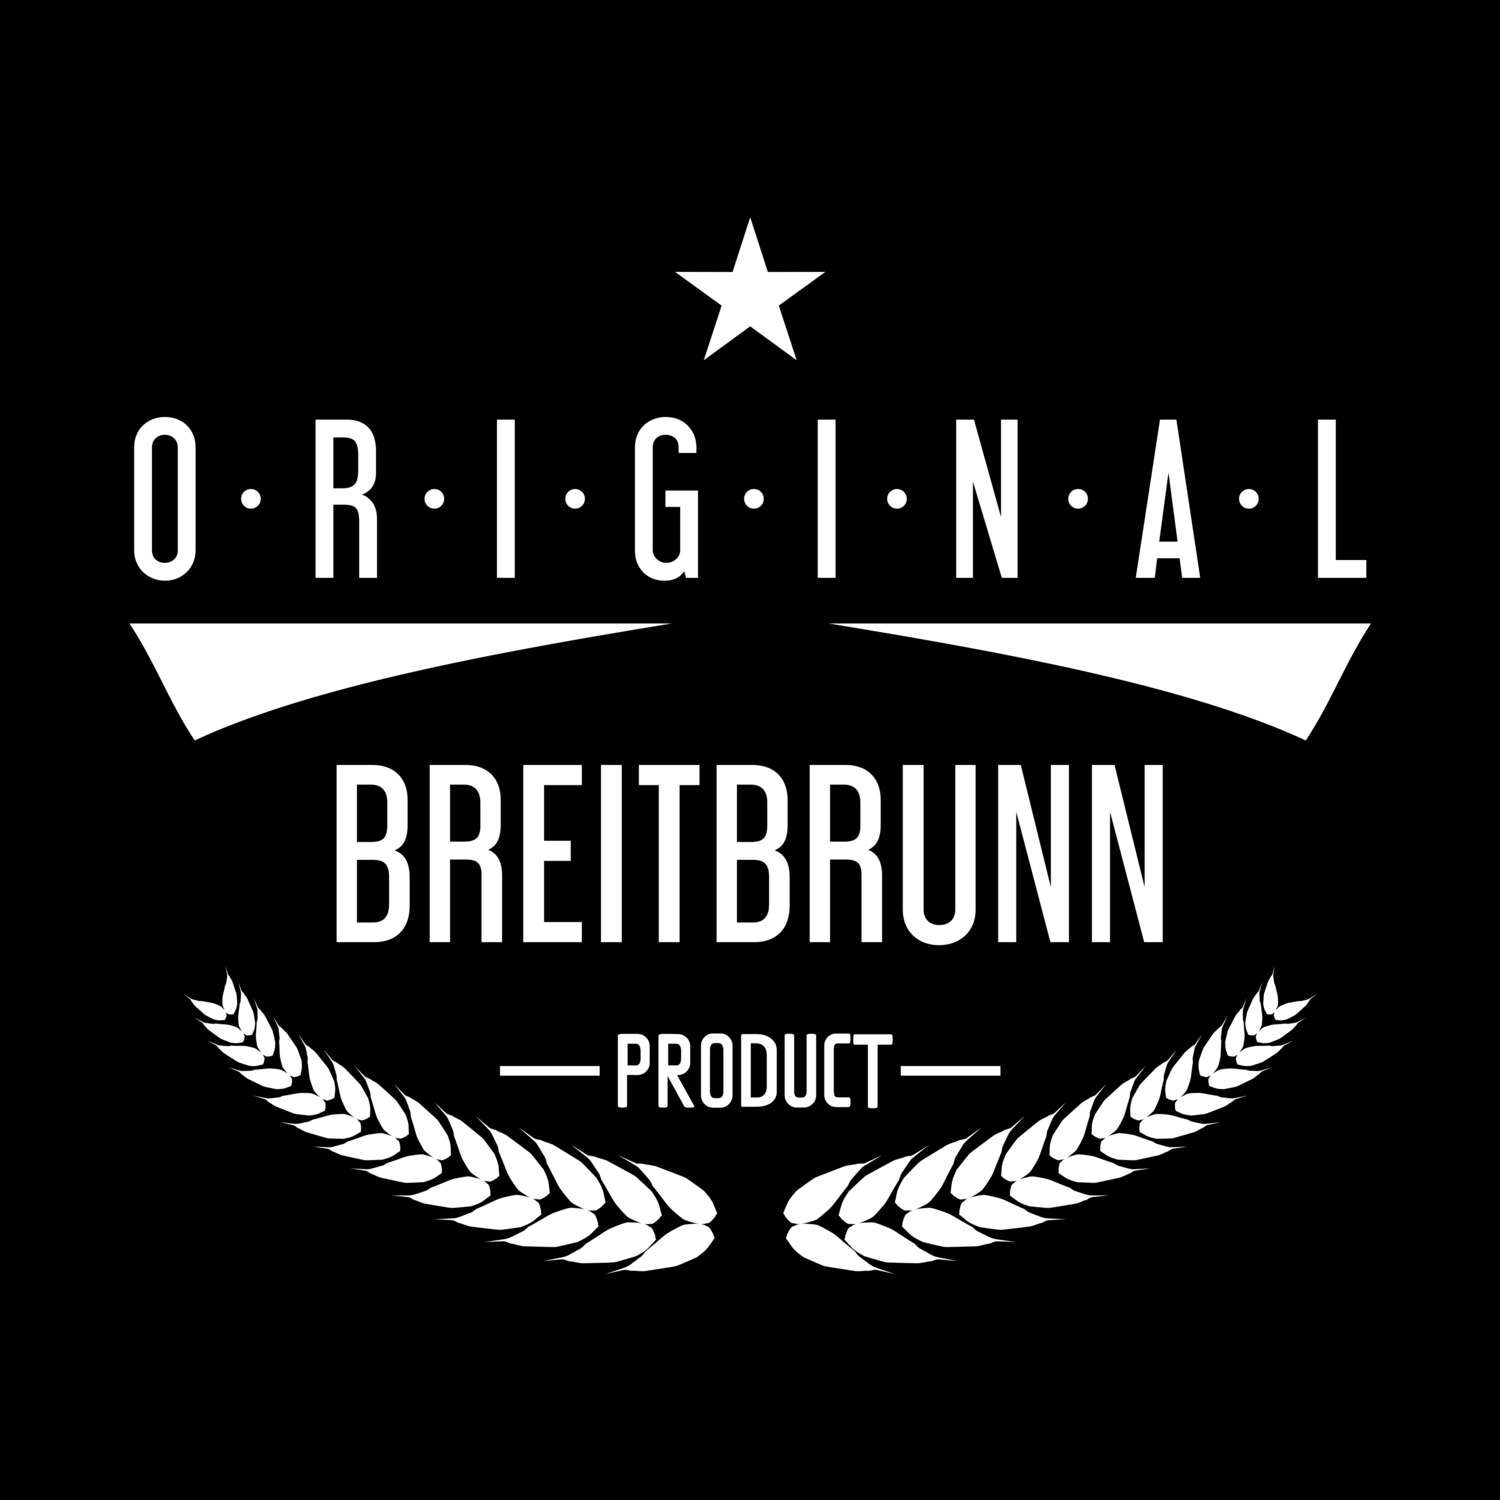 Breitbrunn T-Shirt »Original Product«